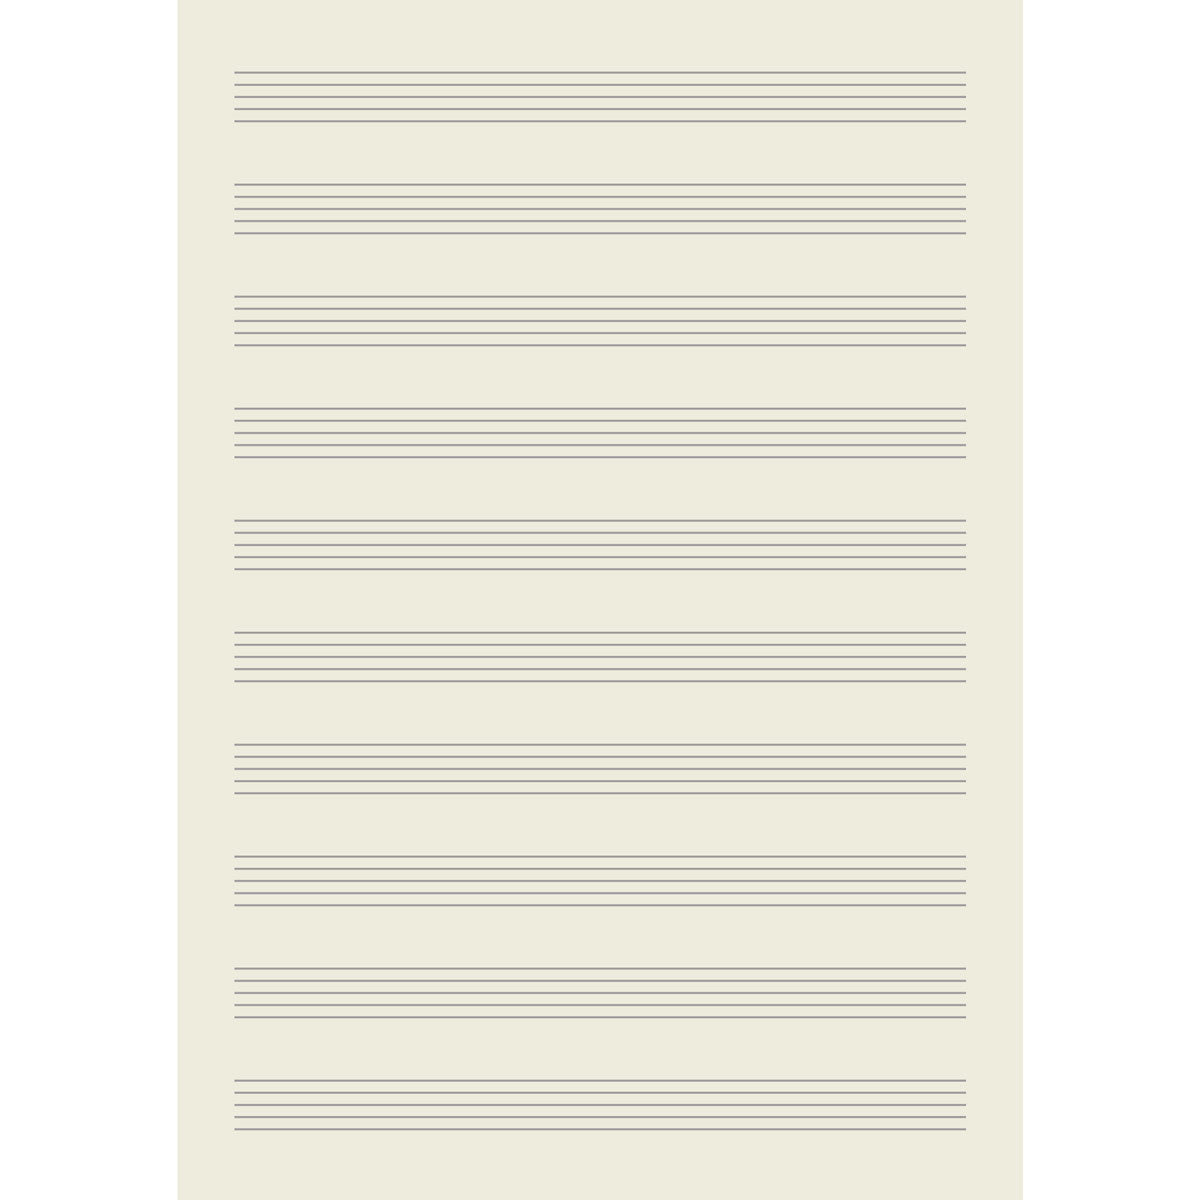 Leather Music Manuscript Notebook - Navy Blue